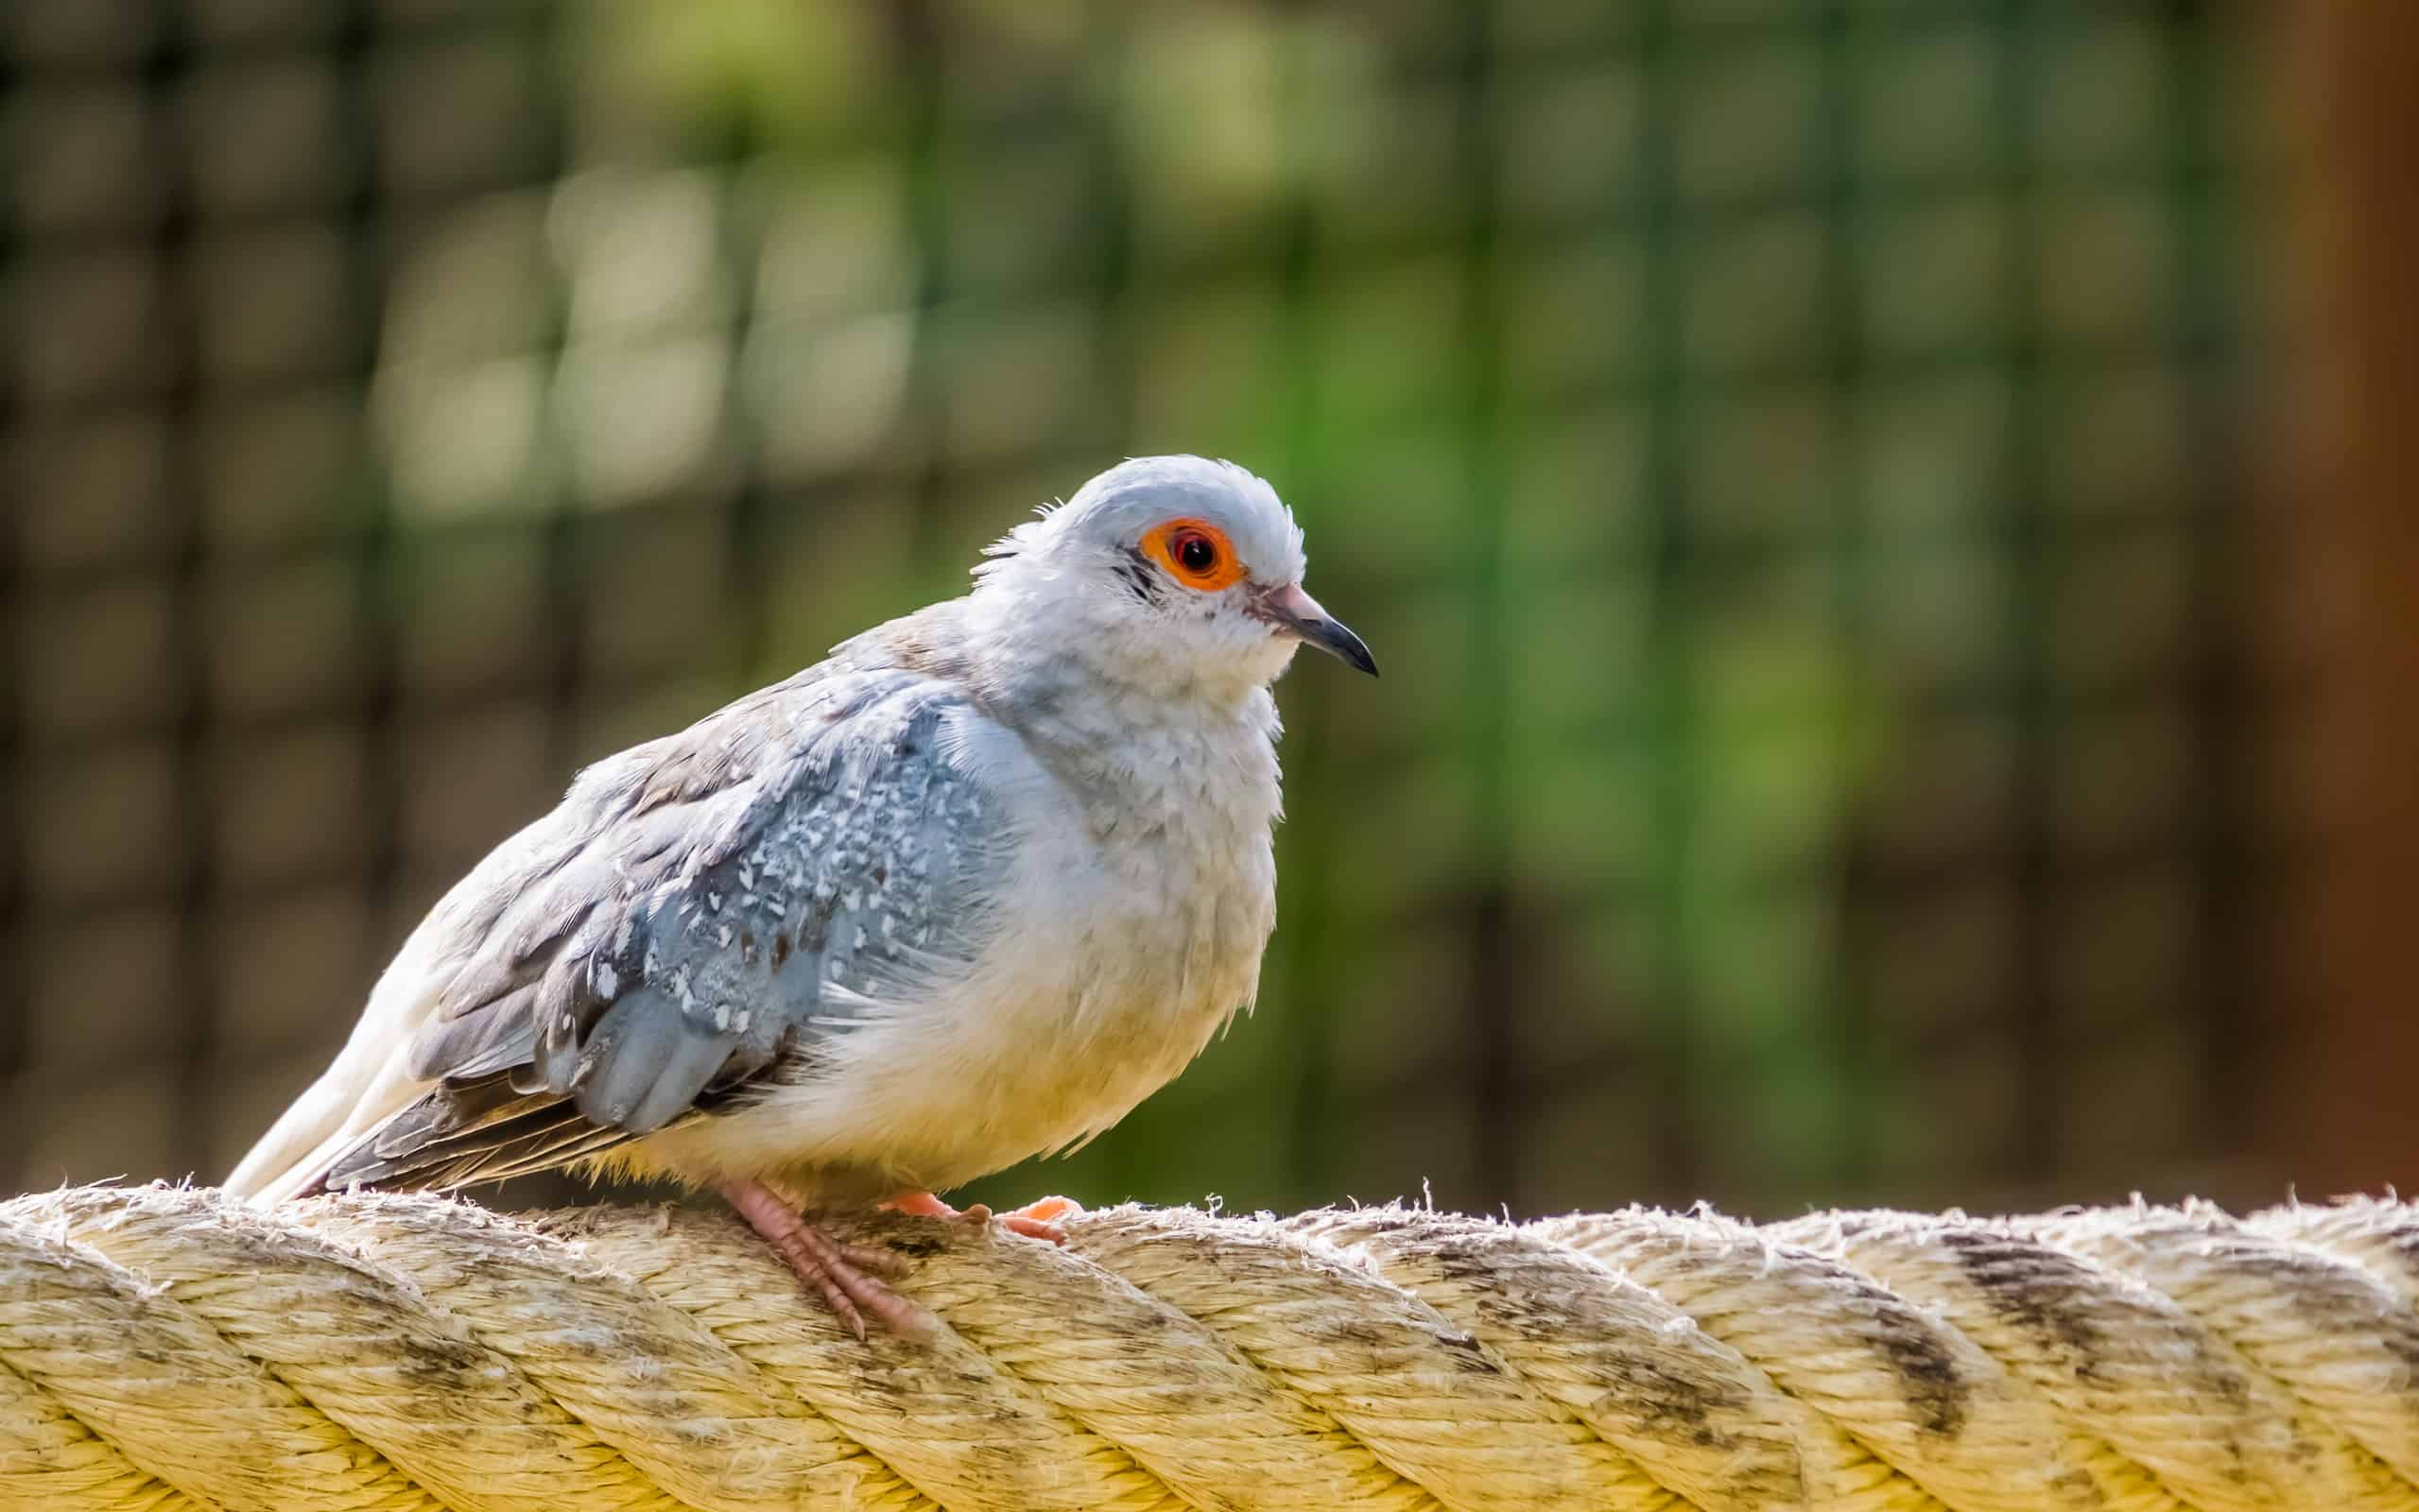 closeup portrait of a diamond dove, popular tropical bird specie from Australia